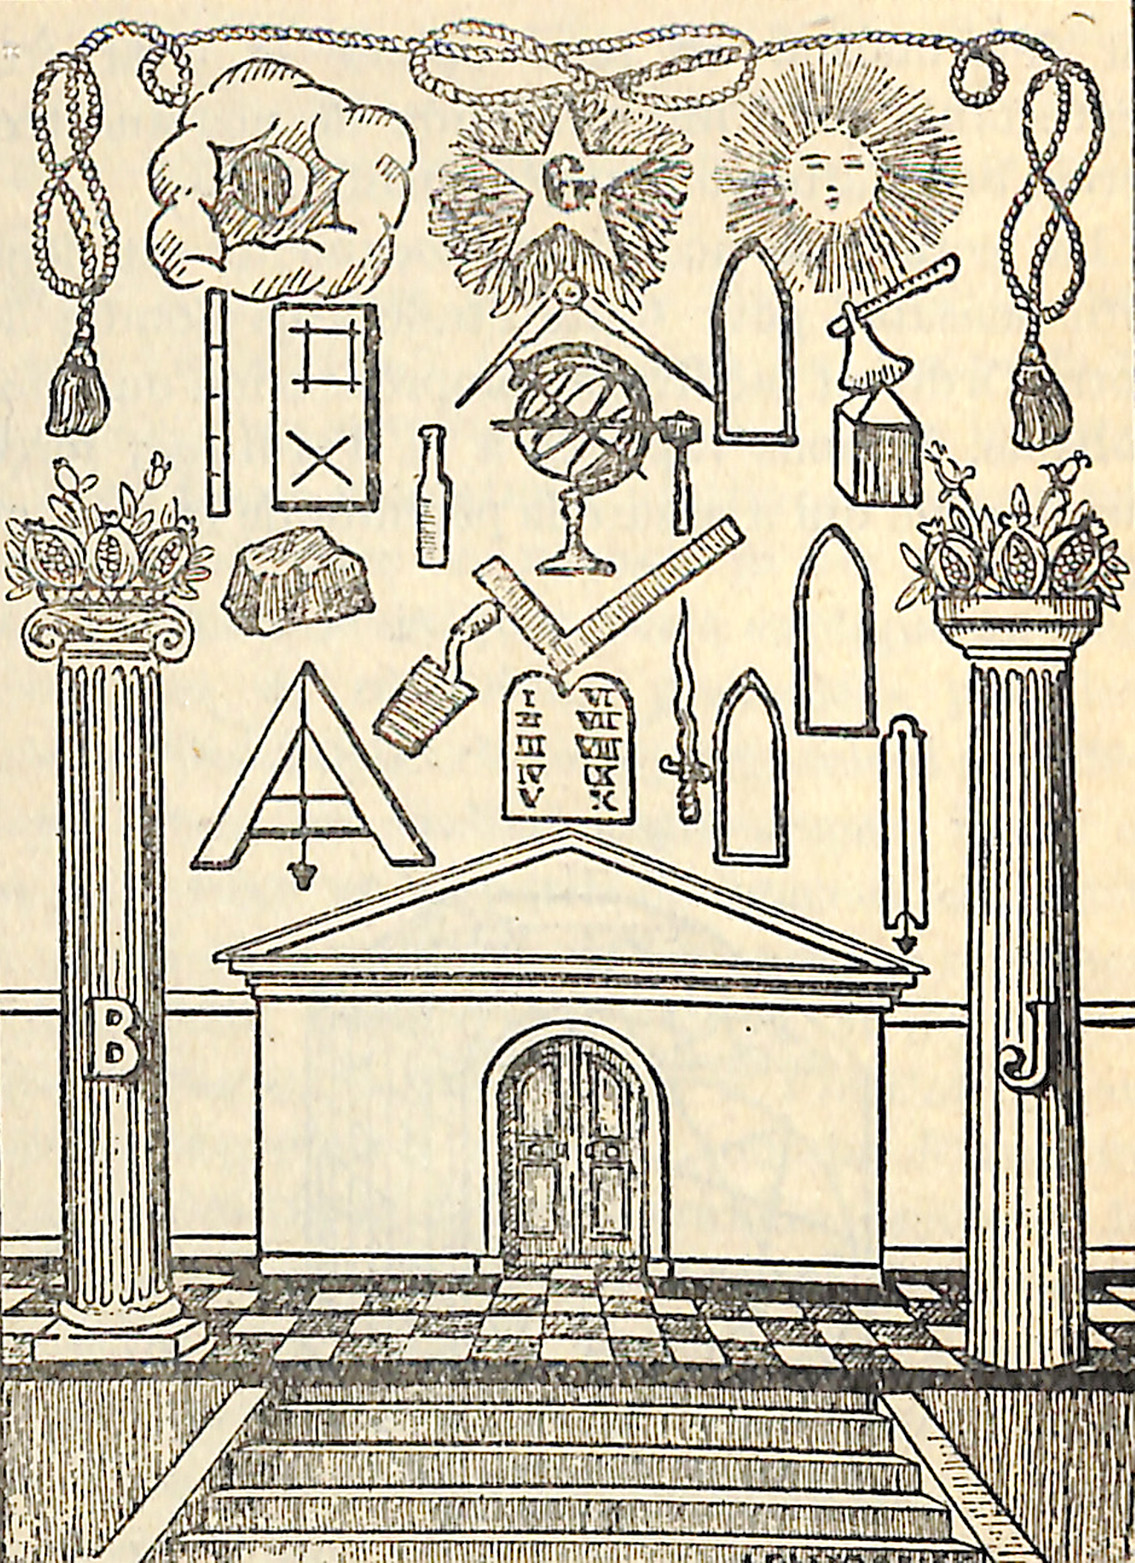 The Symbols of a Lodge